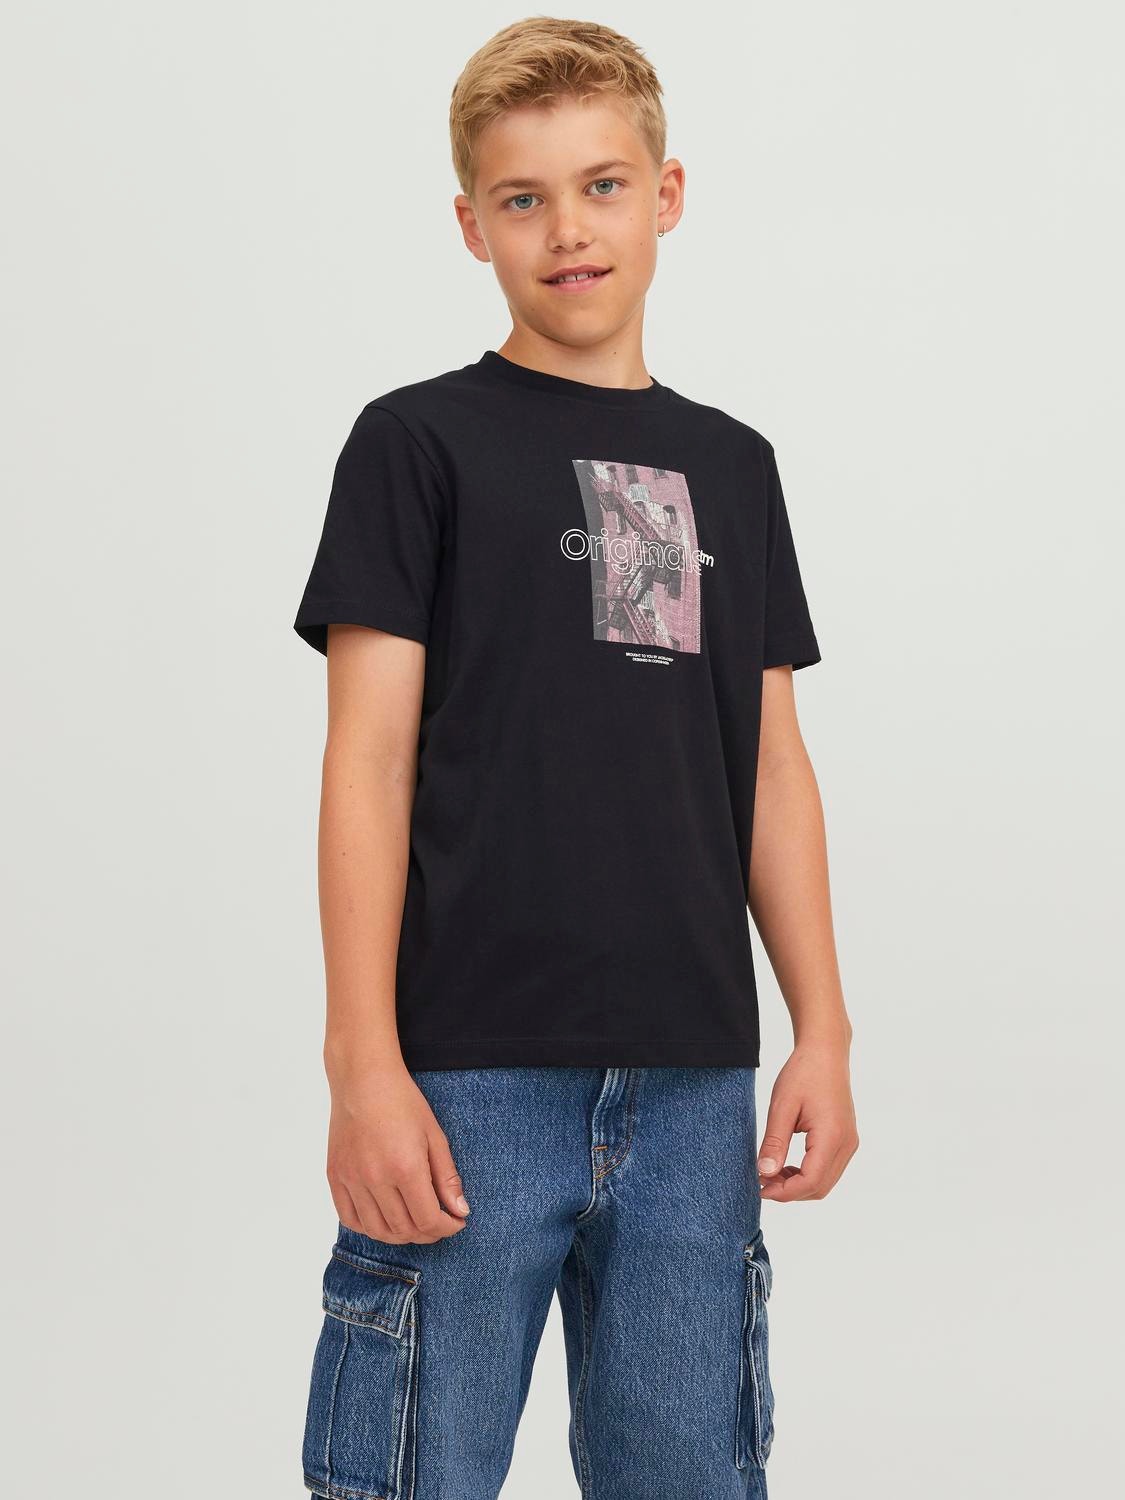 Jack & Jones Photo printed T-shirt For boys -Black - 12242845